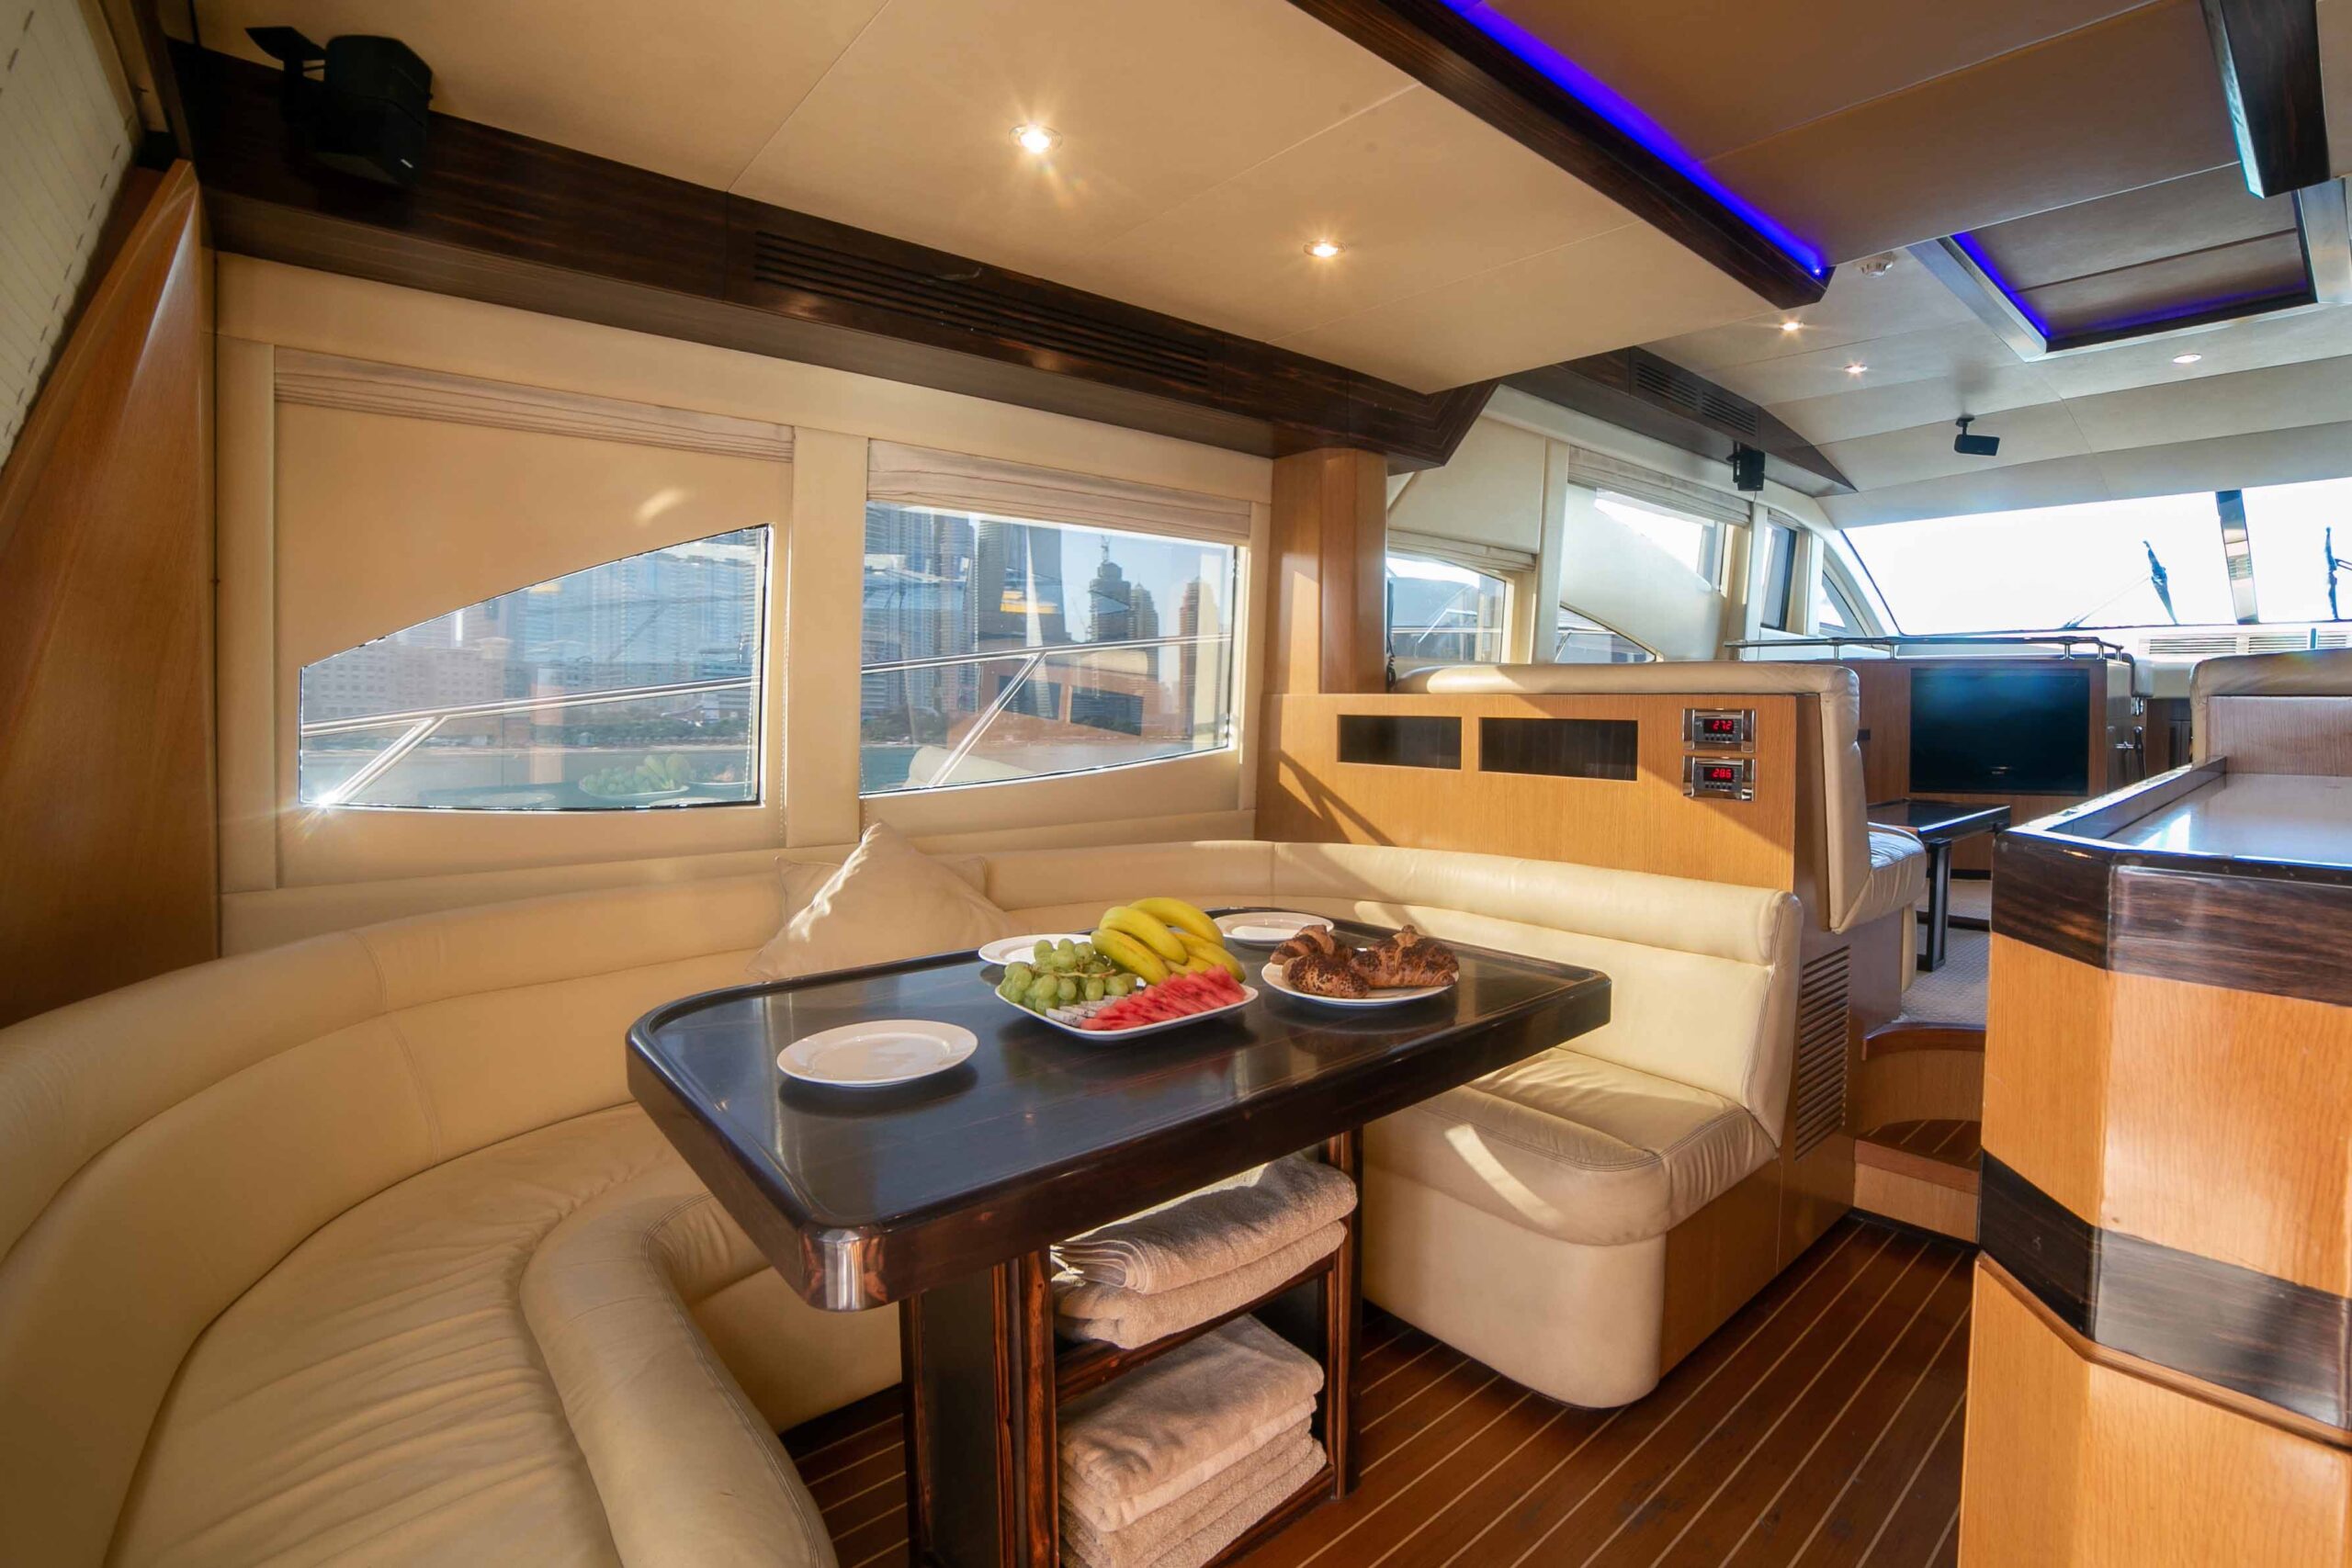 Explorer Goldeon Nightingale 55 ft. yacht with best price in Dubai